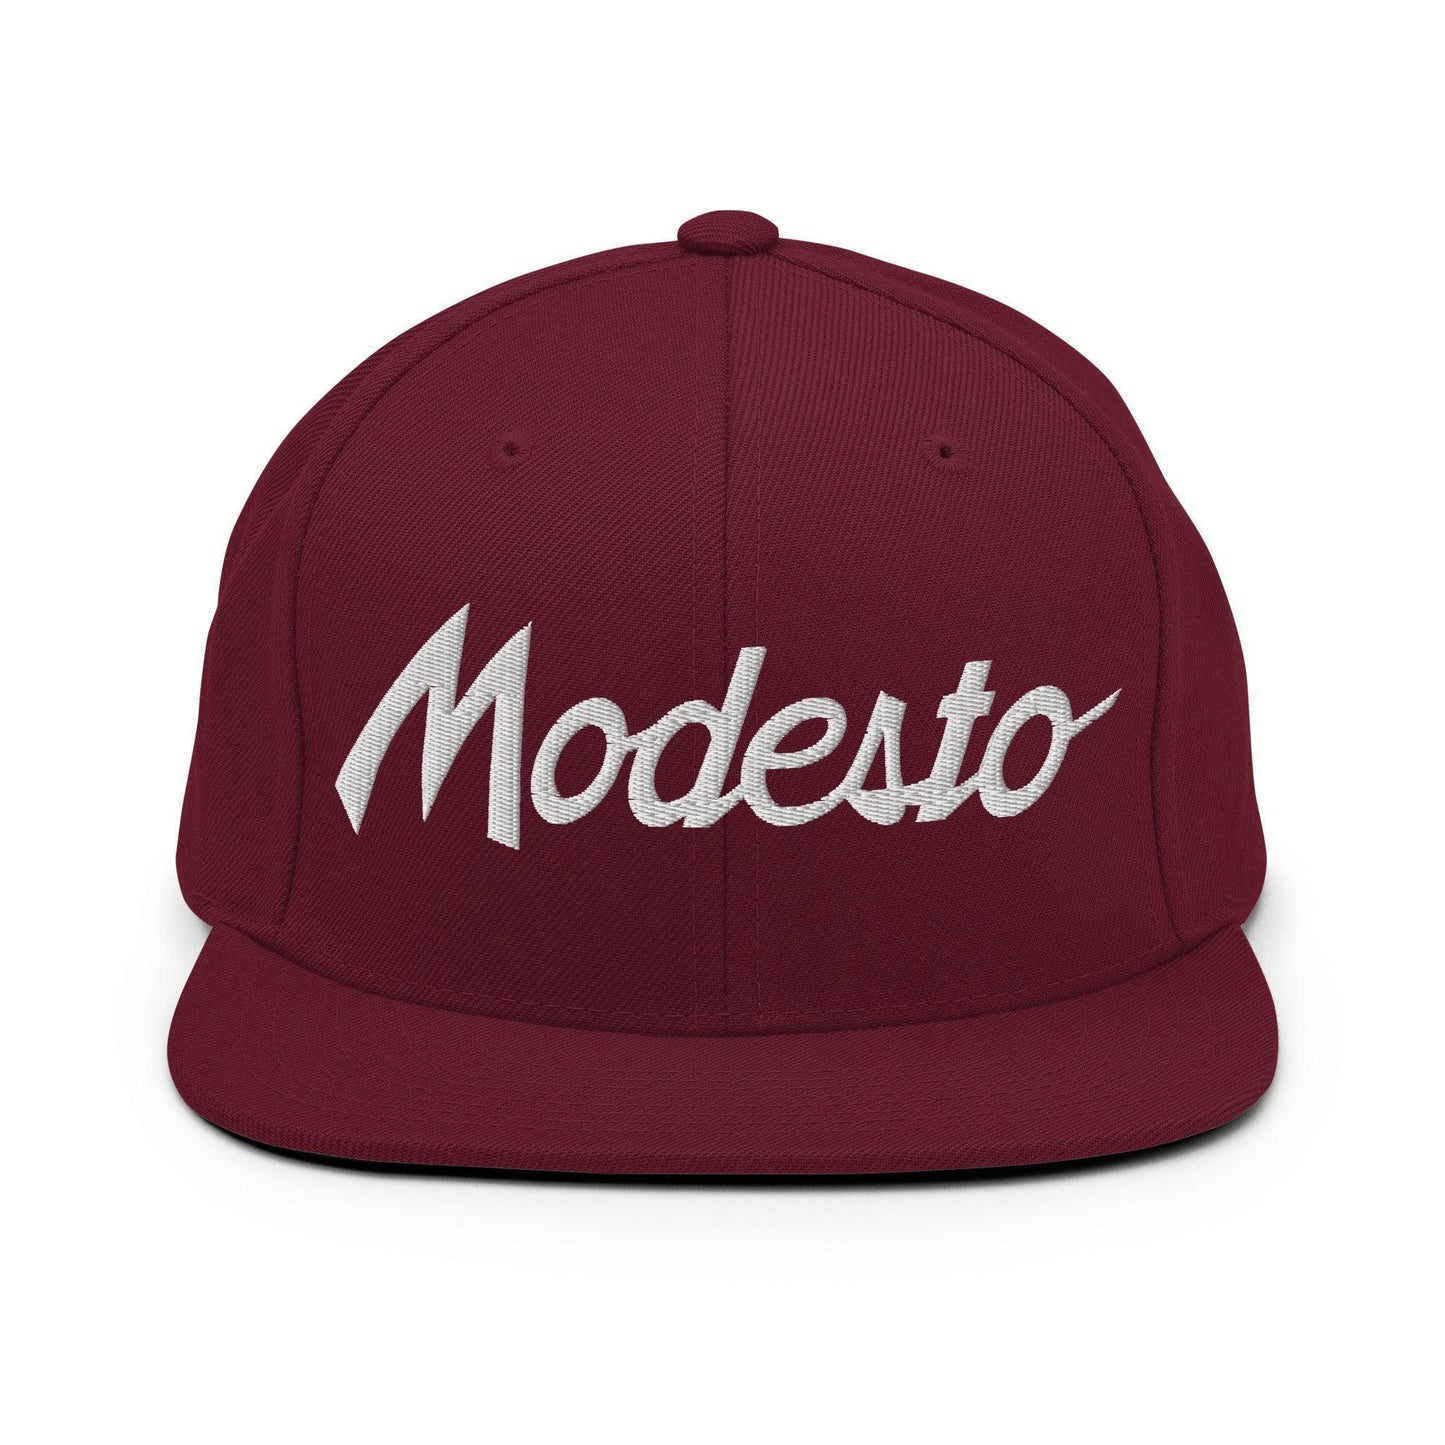 Modesto Script Snapback Hat Maroon